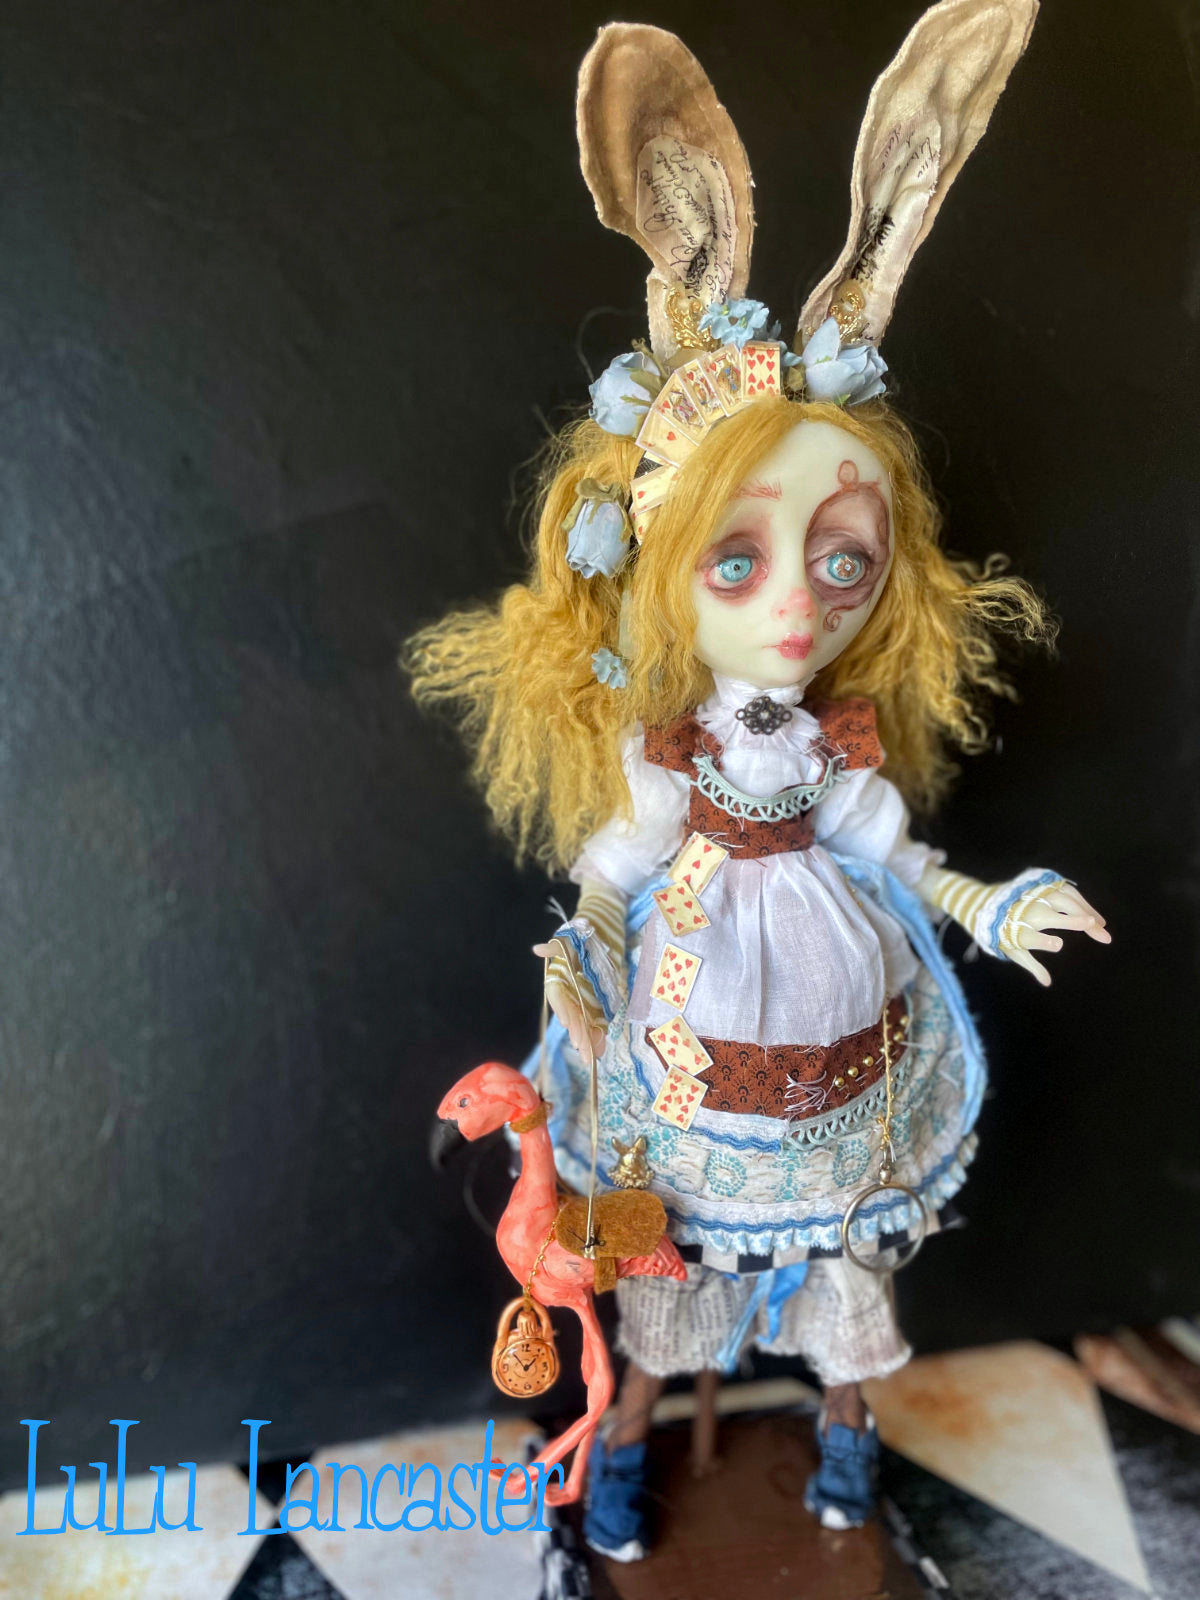 Steampunk Alice LuLu's Wonderland Original LuLu Lancaster Art Doll